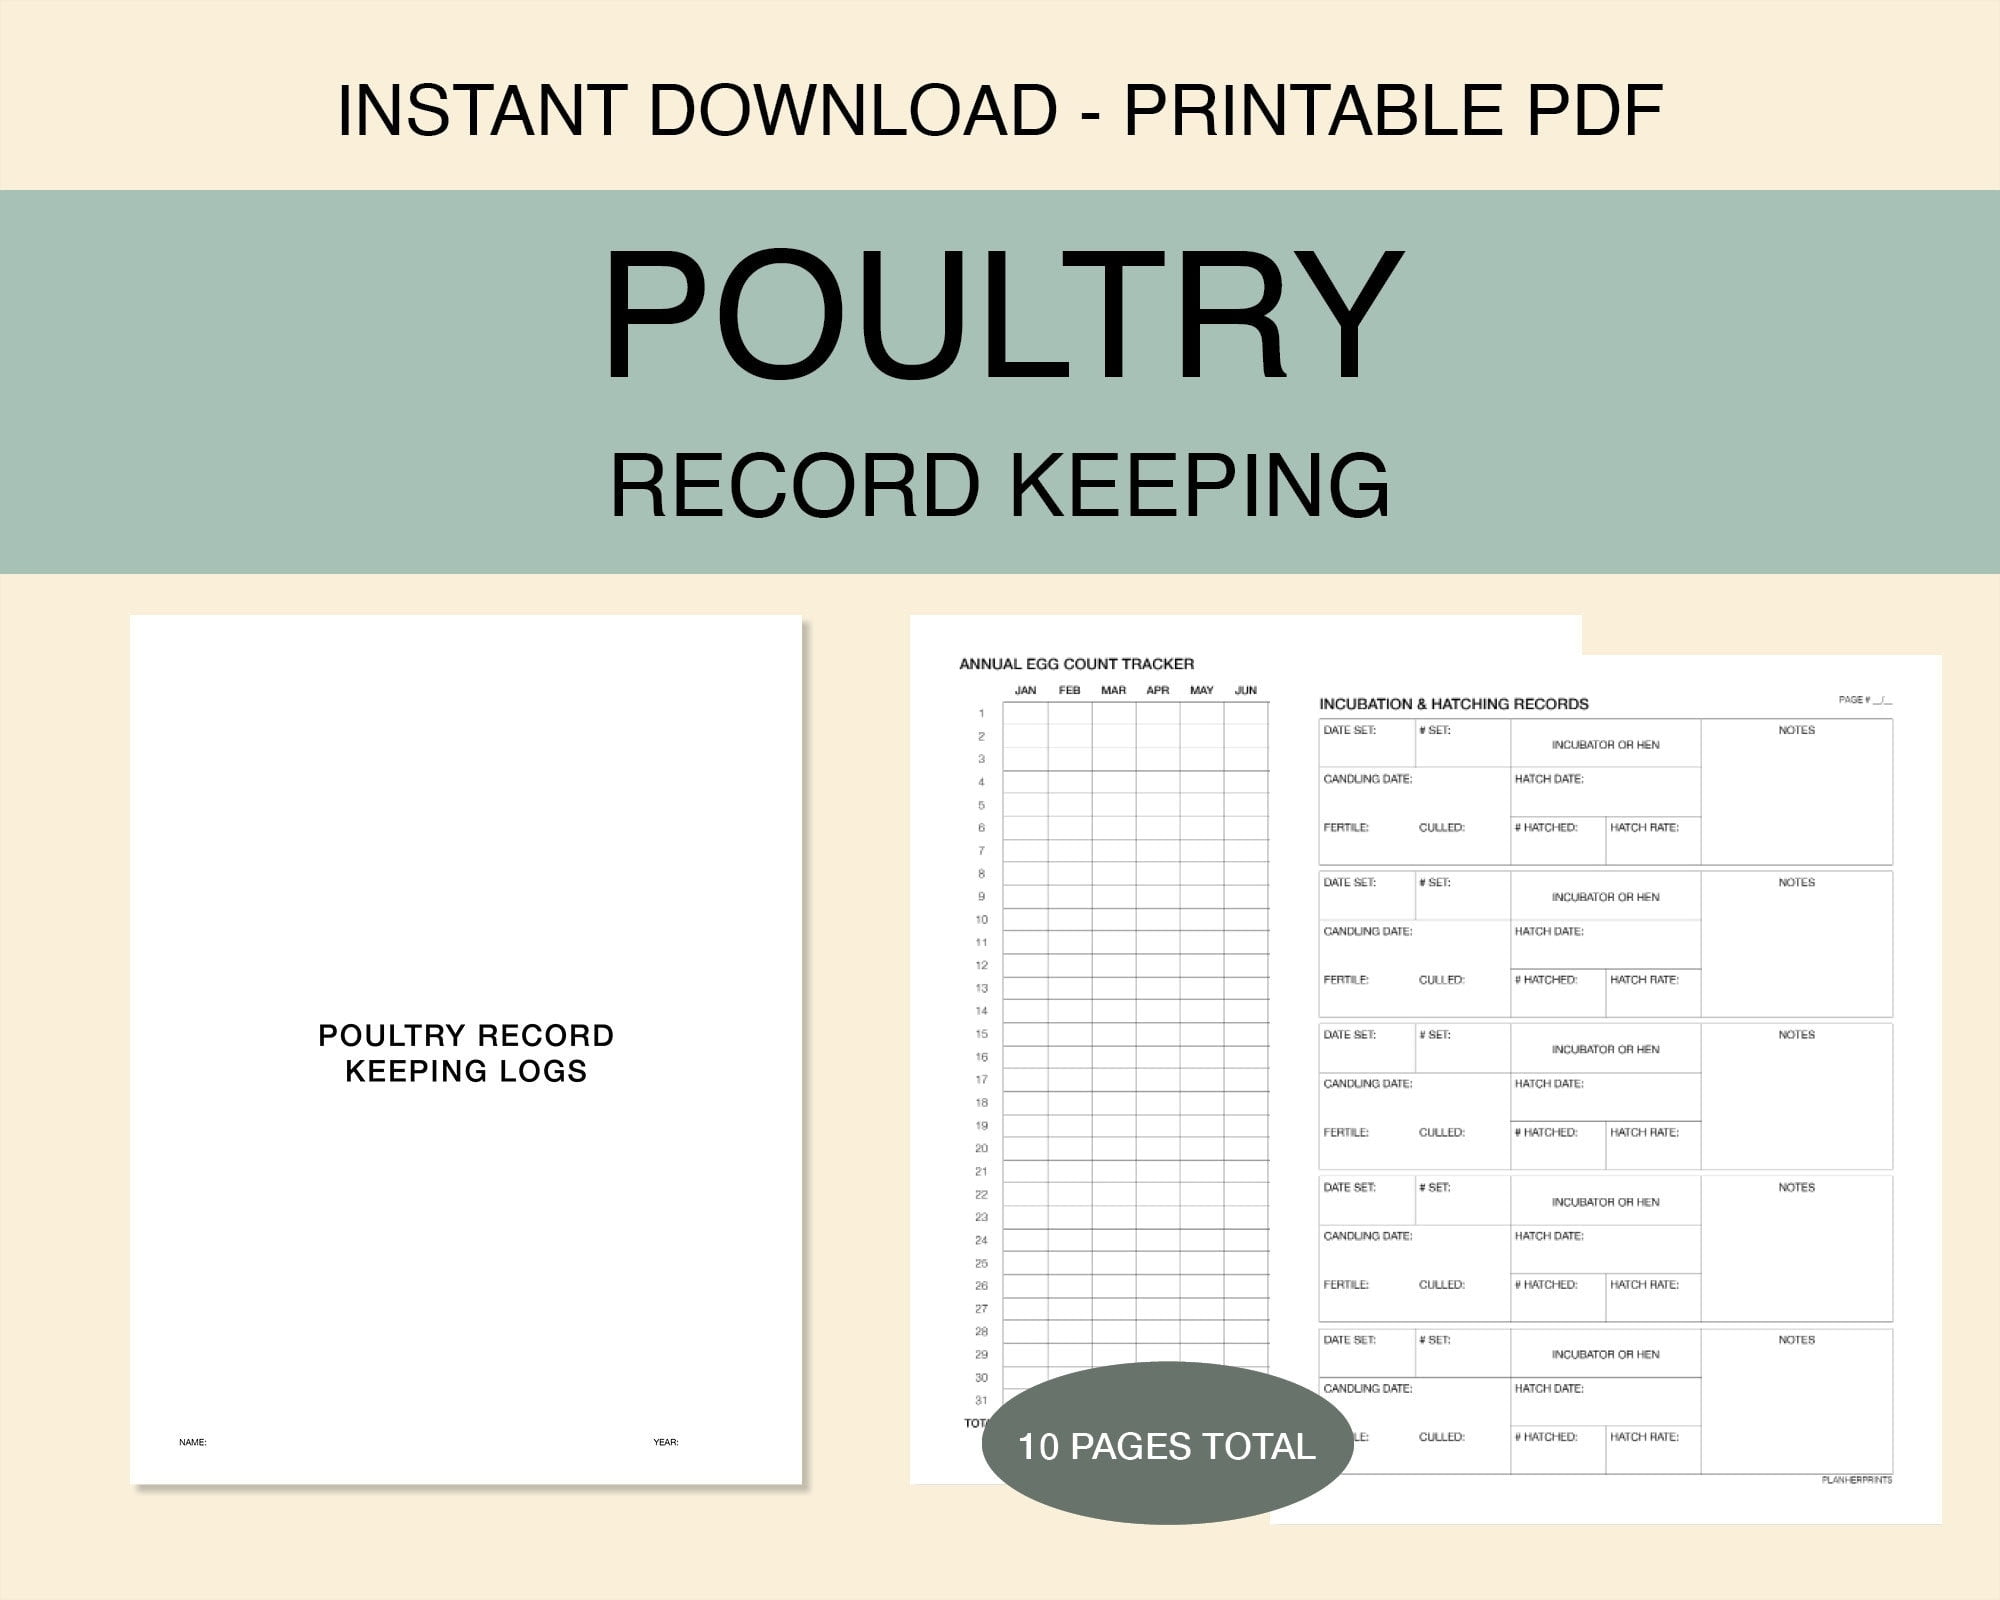 Poultry Record Keeping Log Printable PDF